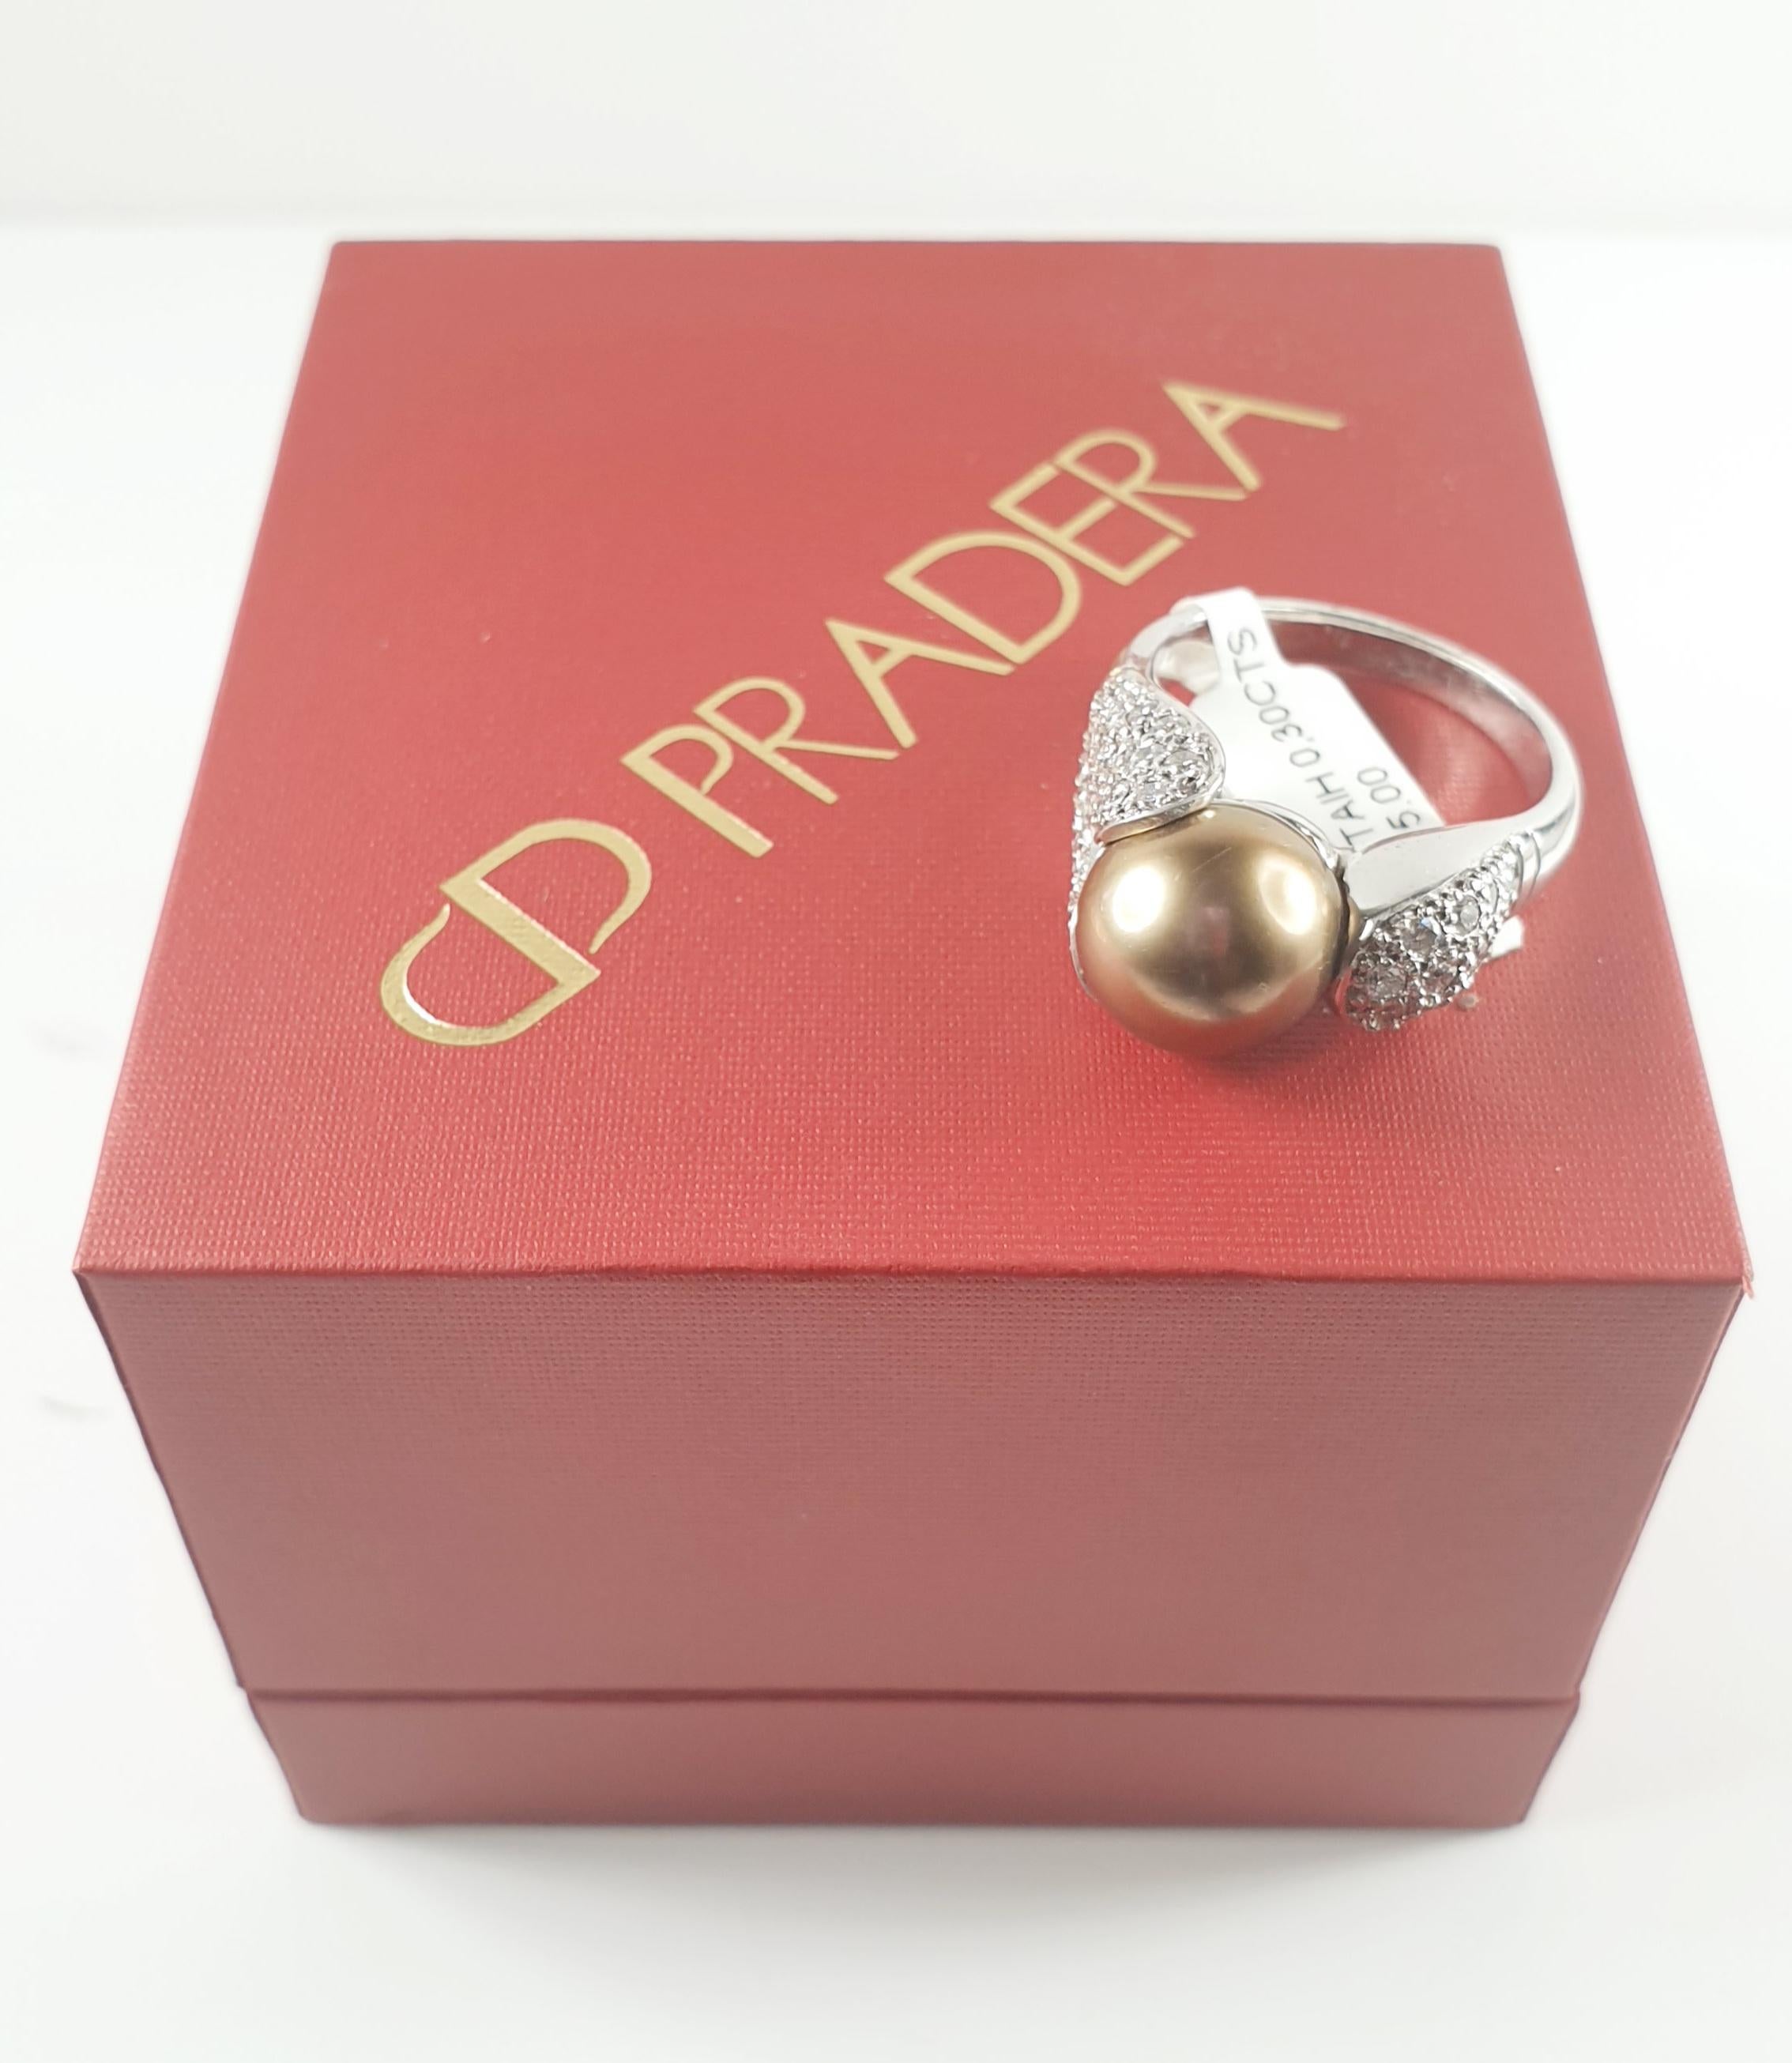 Pradera Tahiti Pearl Cocktail Ring with White Diamonds and 18 Karat White Gold For Sale 1